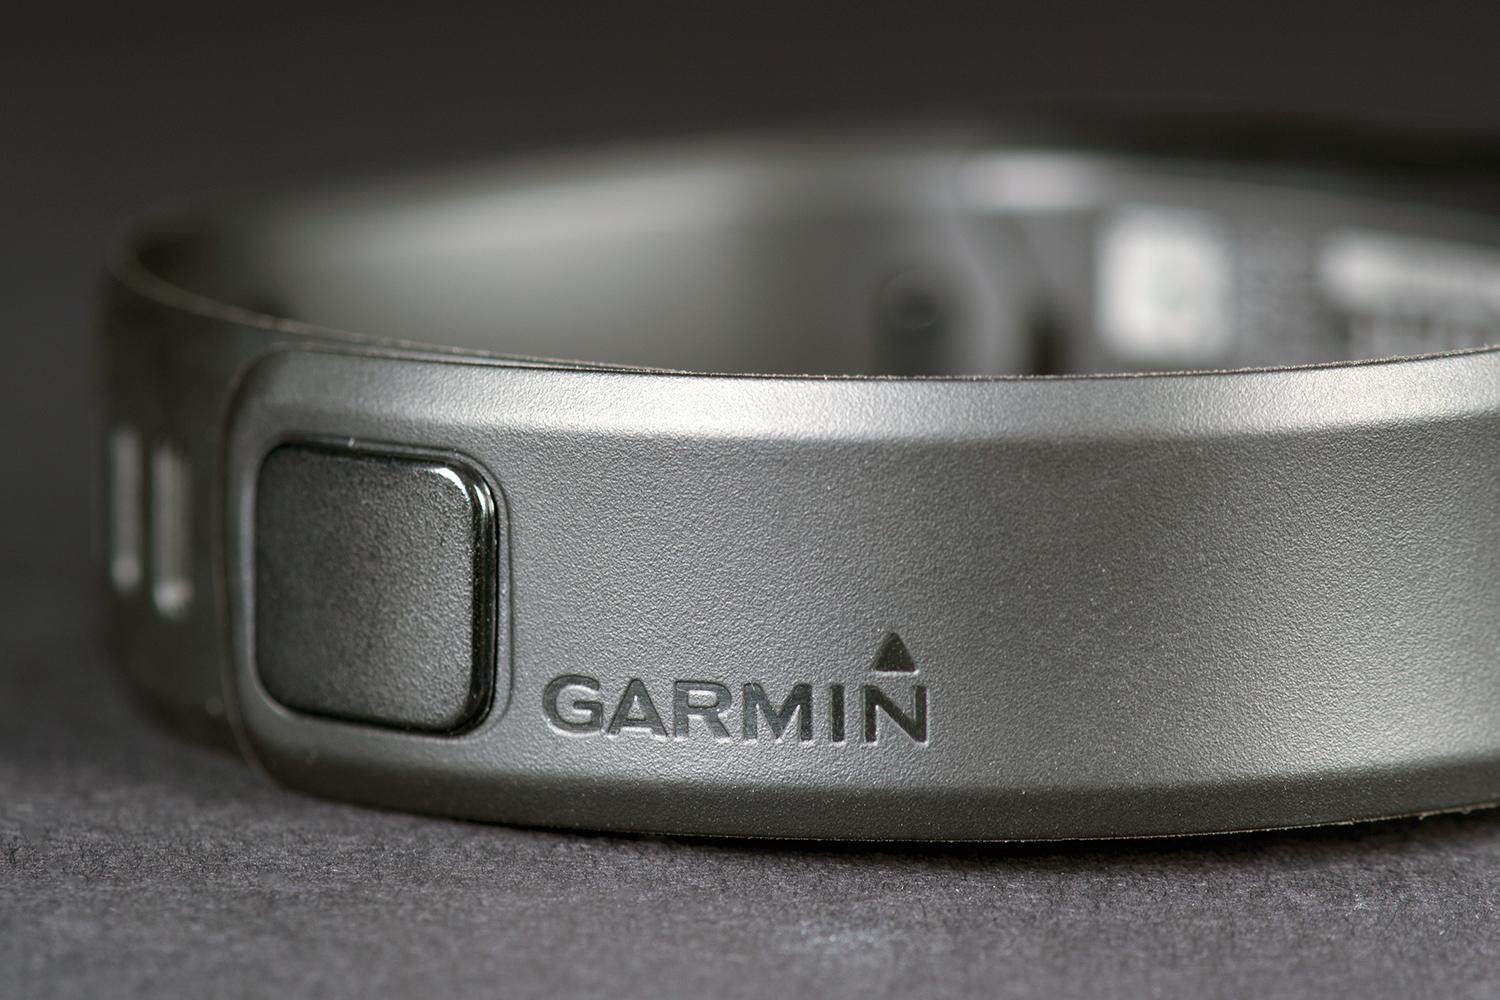 Garmin 5 is a Smartwatch for Boat | Digital